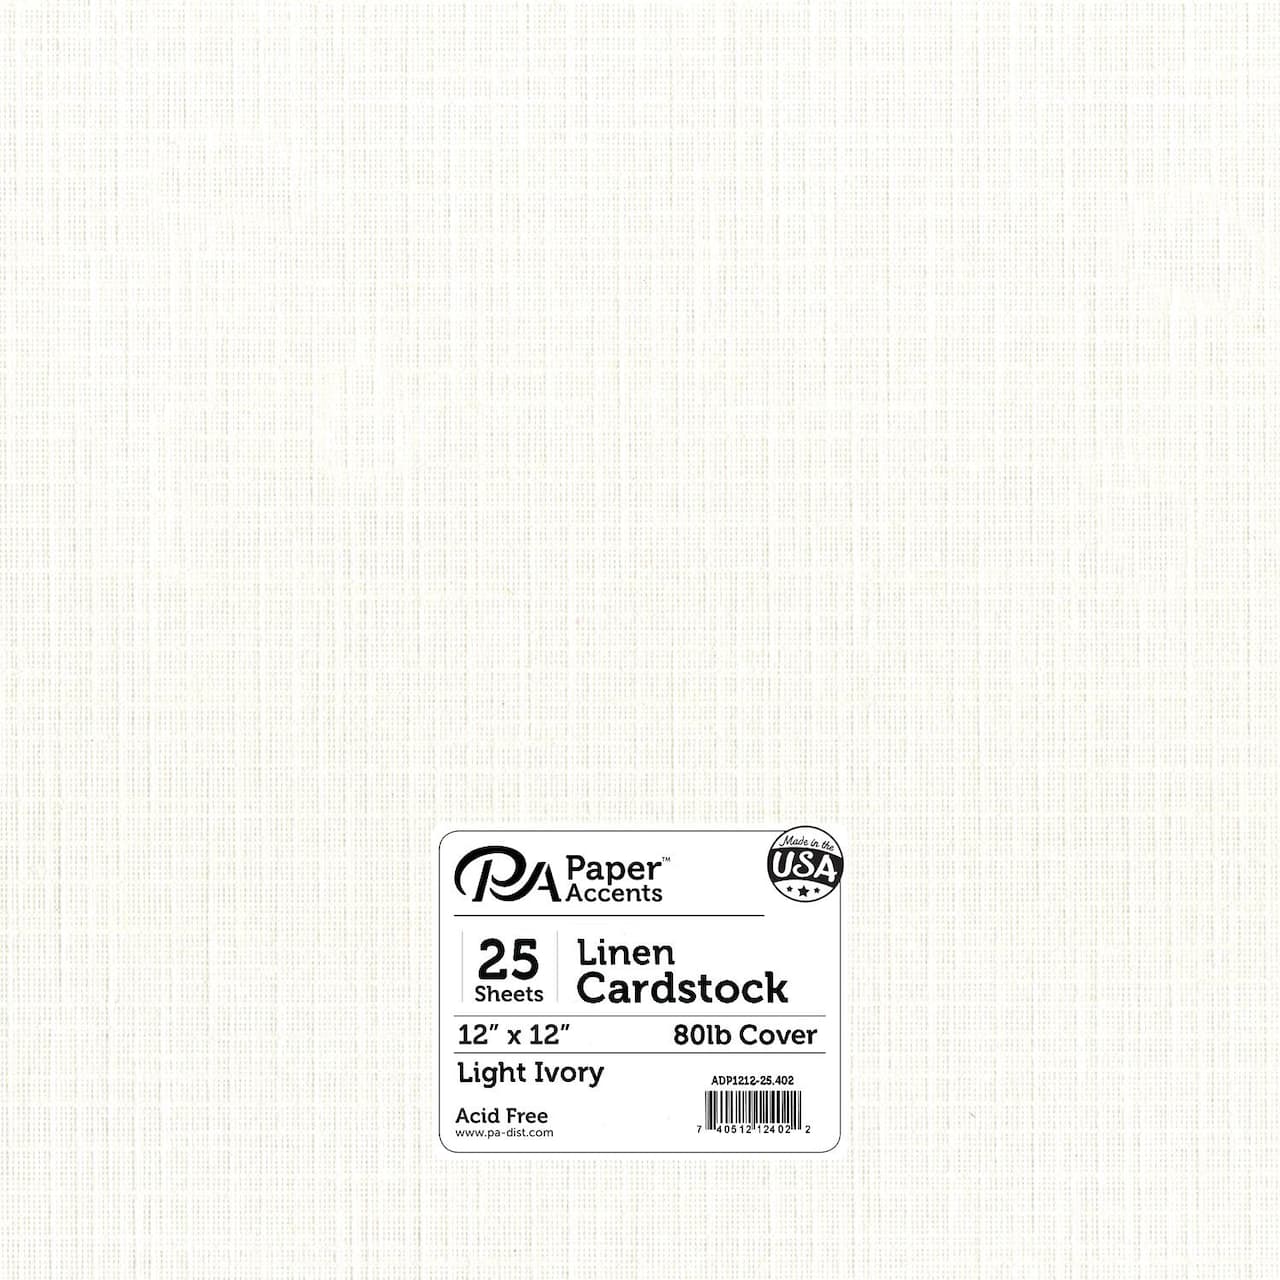 Paper Accents Cdstk Linen 12x12 80lb Light Ivory